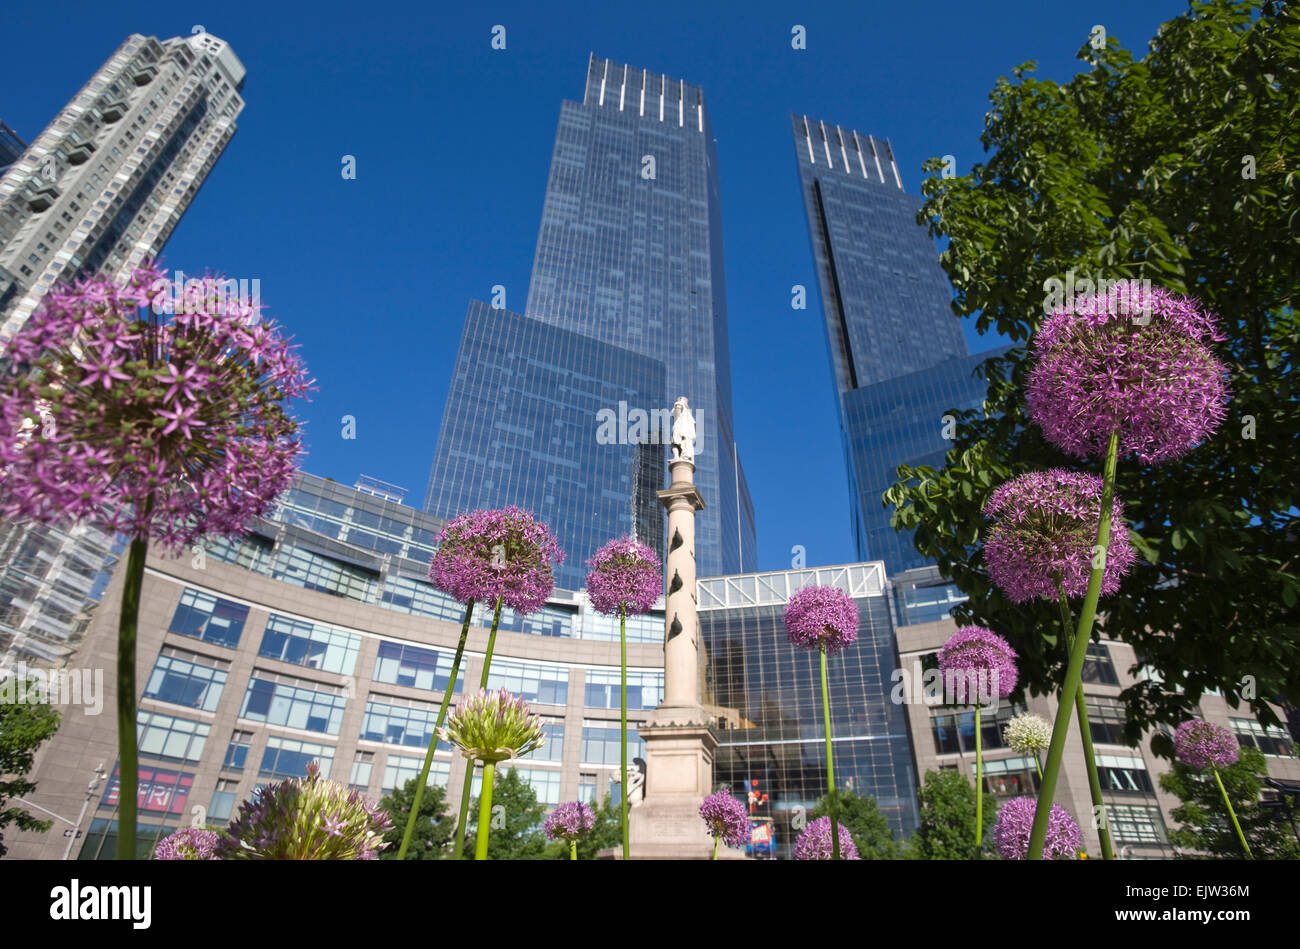 ALLIUM FLOWERS DEUTSCHE BANK CENTER (©SOM 2004) COLUMBUS CIRCLE MIDTOWN MANHATTAN NEW YORK CITY USA Stock Photo